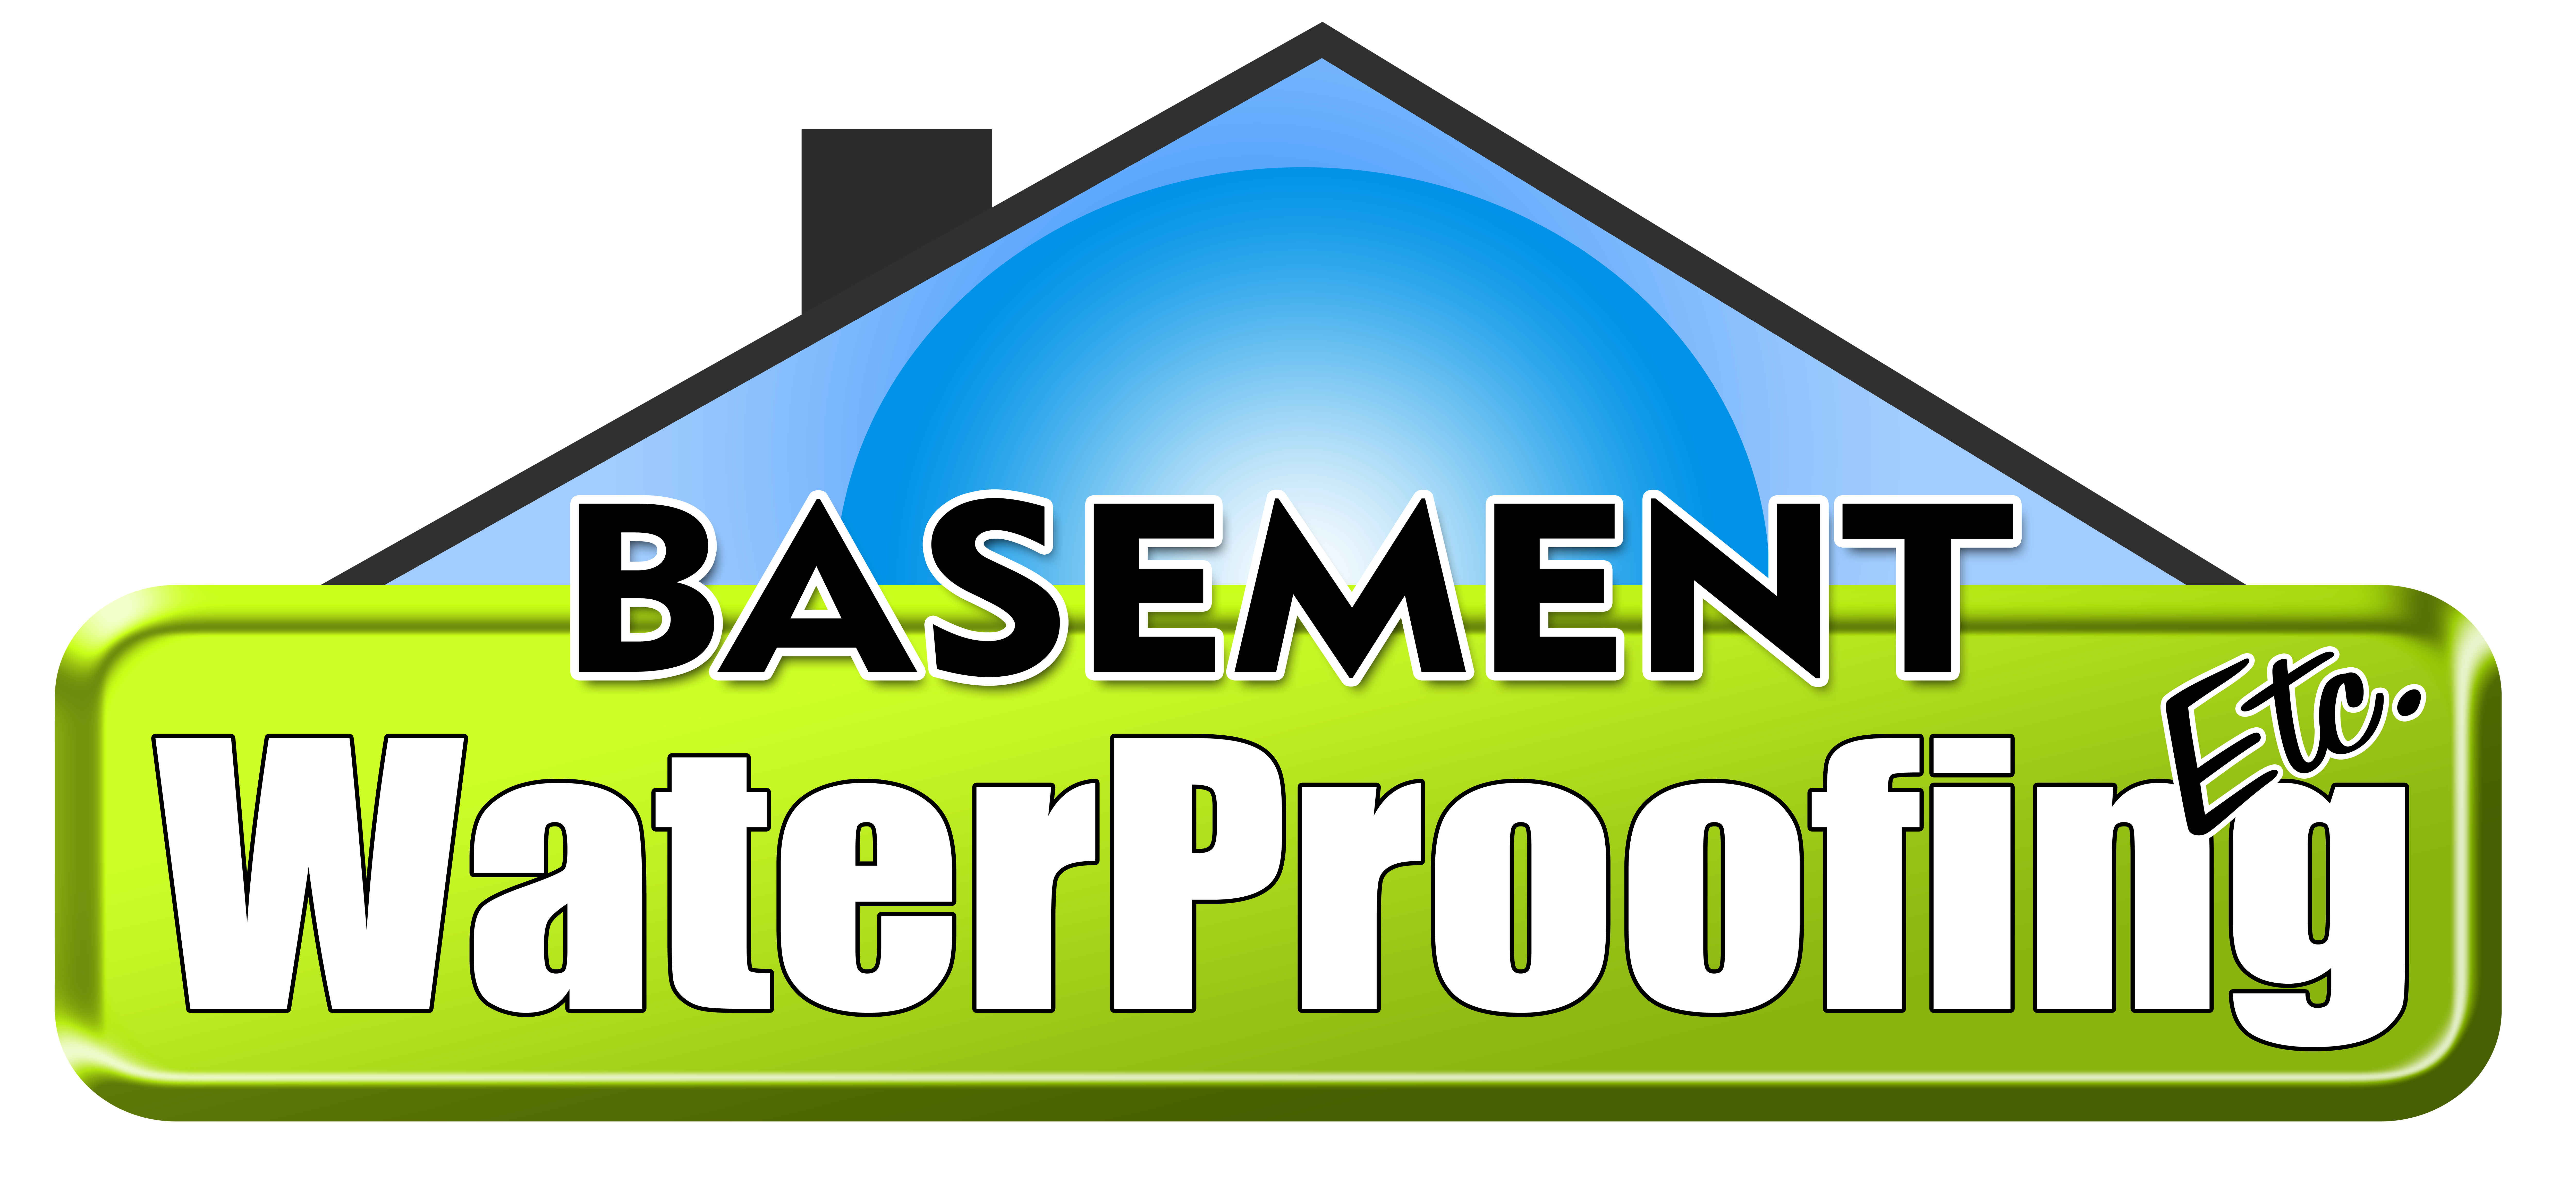 Basement Waterproofing Etc. Logo